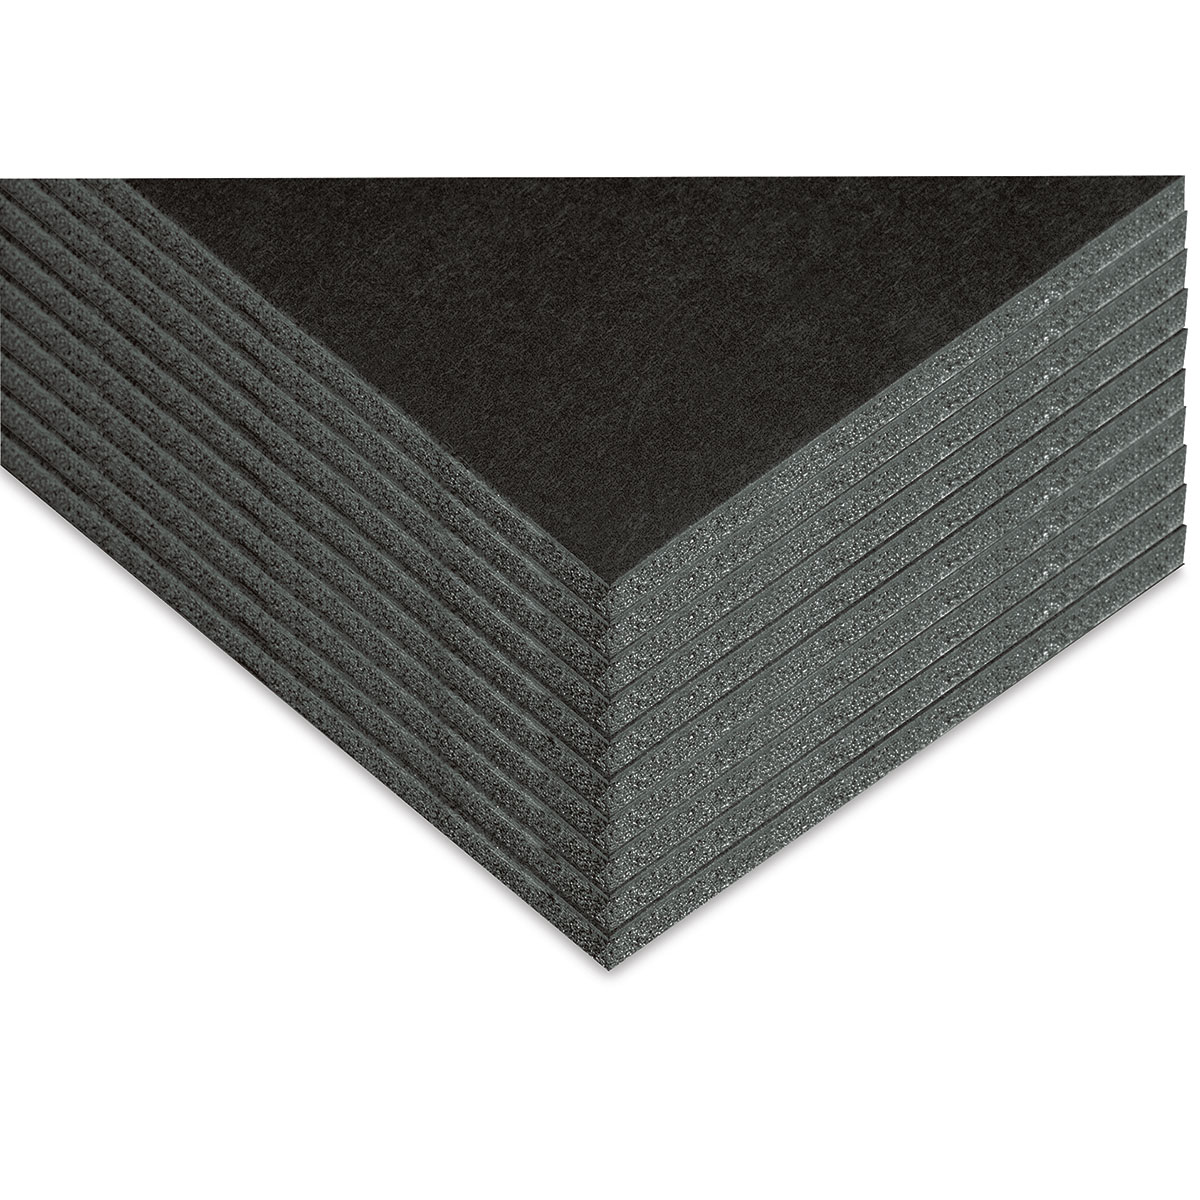 Elmer's Foam Board 3/16 x 24 x 36 Black-on-Black 81242